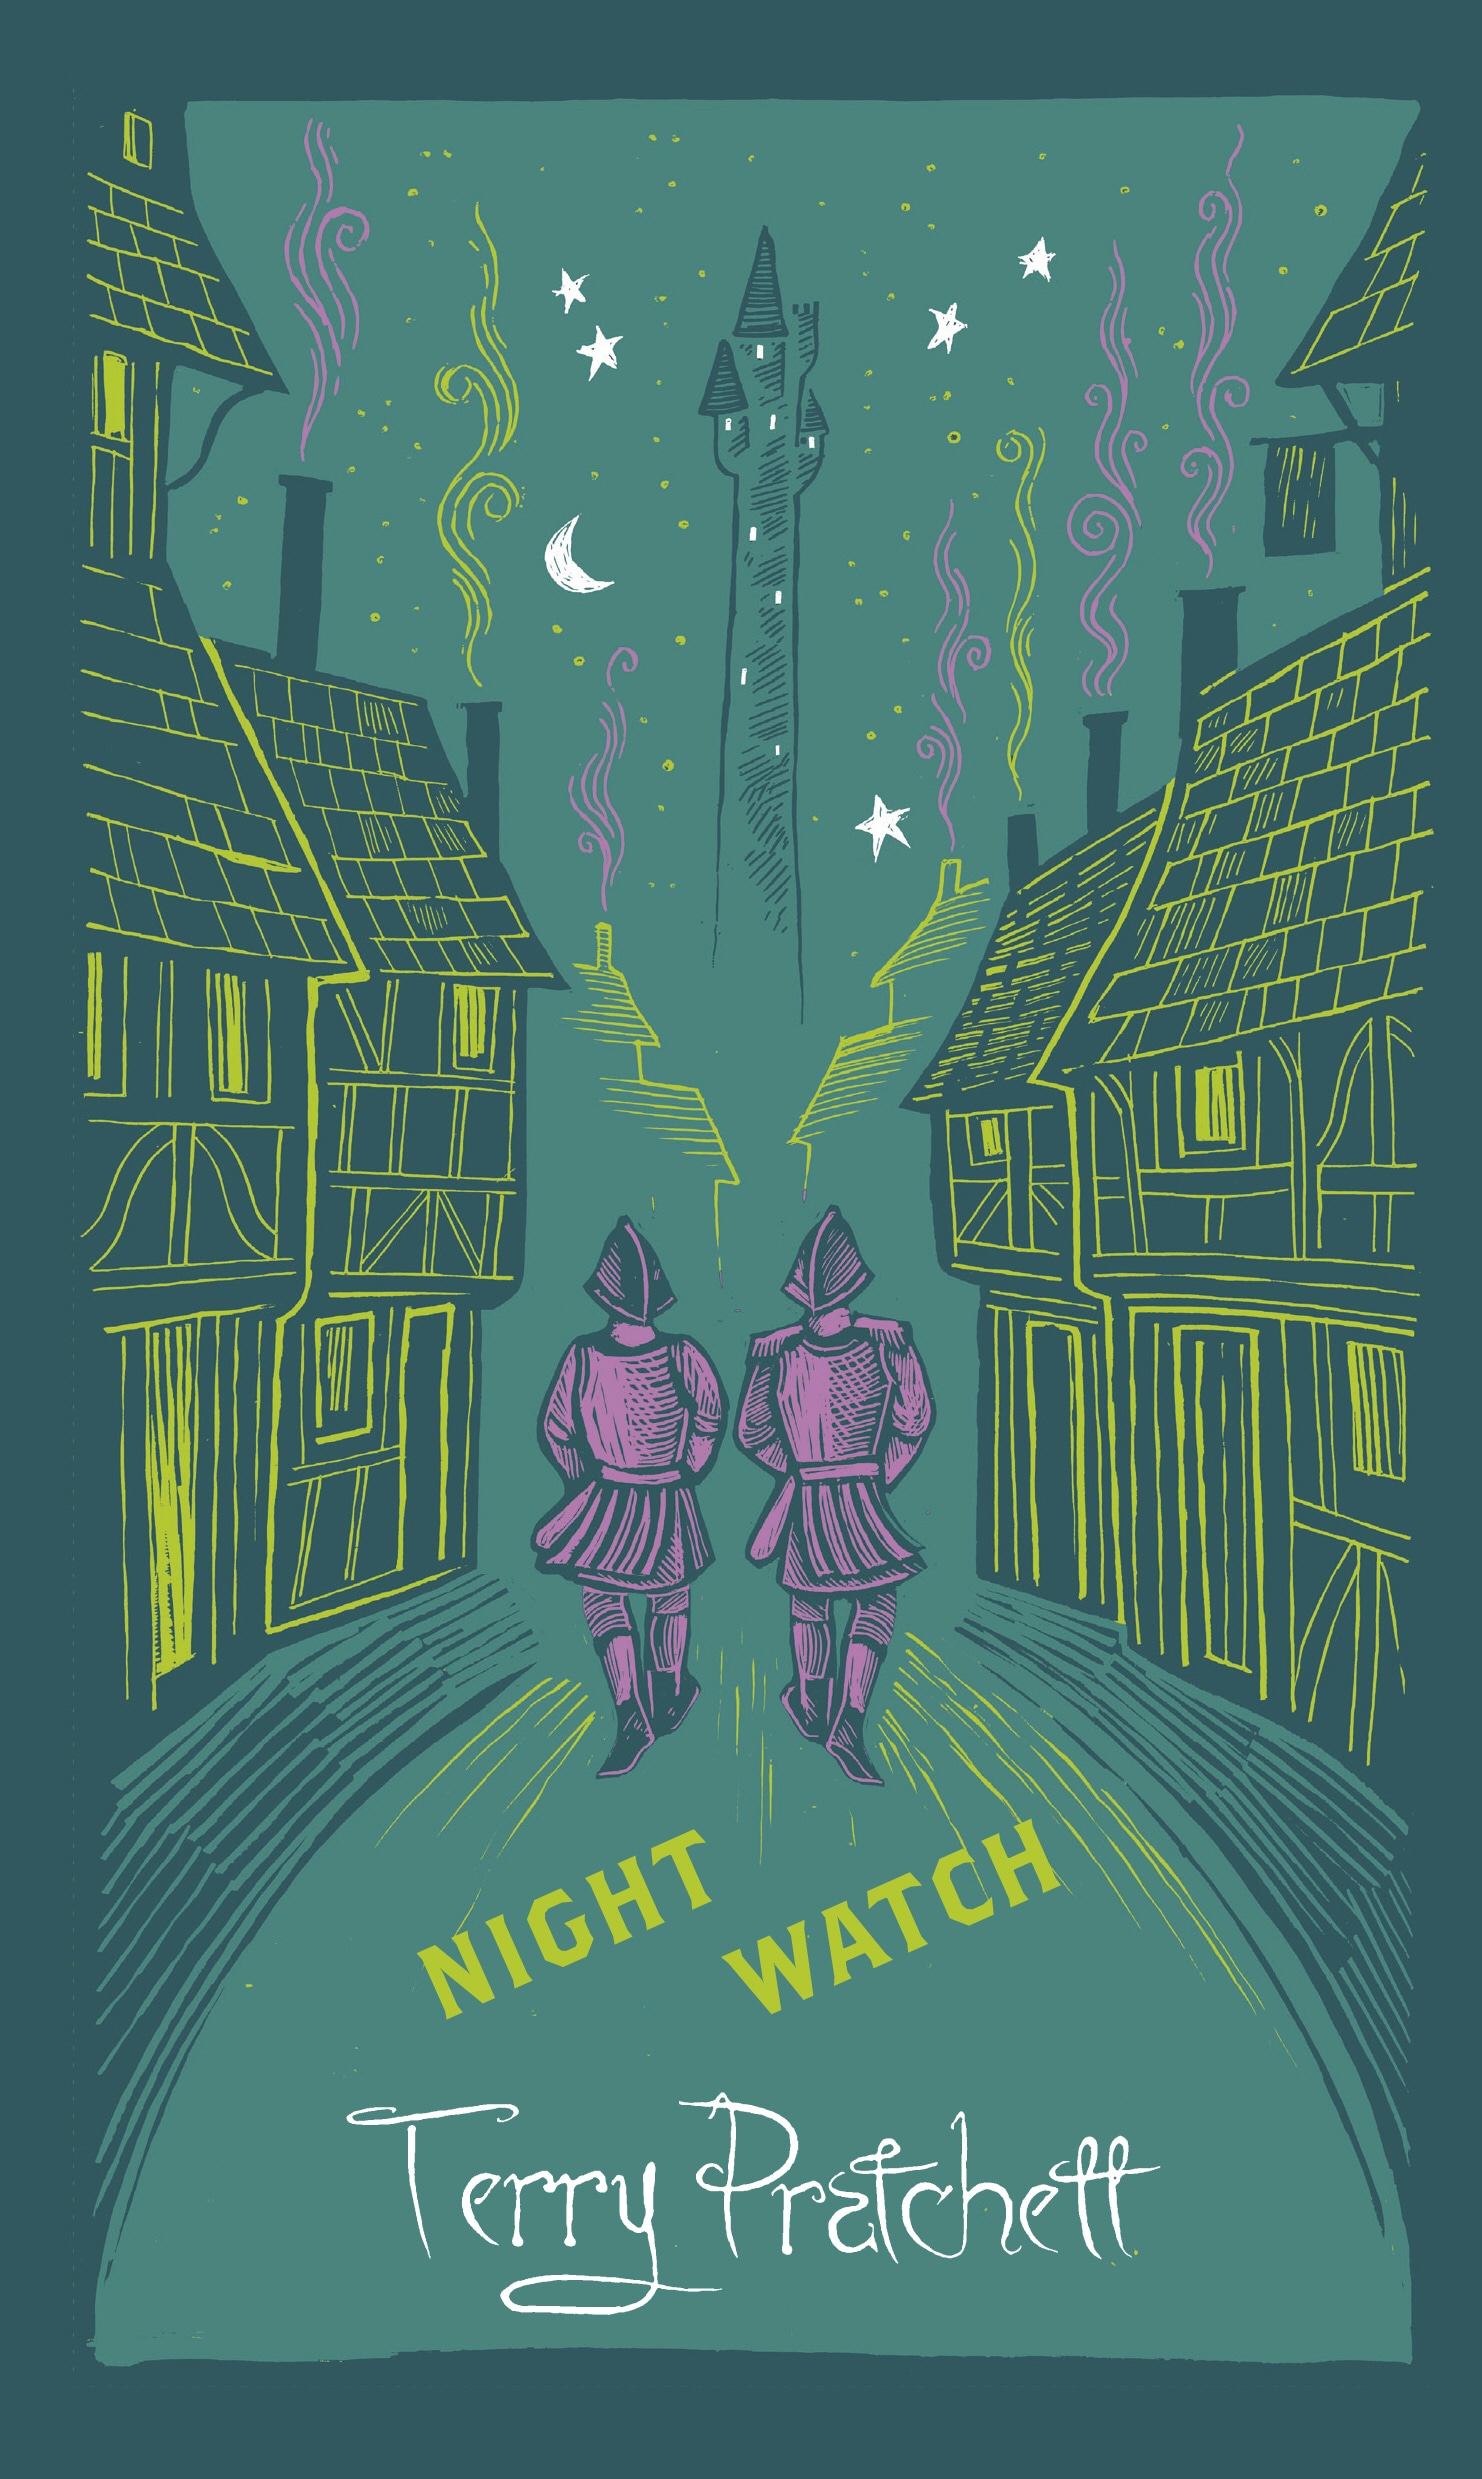 Book “Night Watch” by Terry Pratchett — October 19, 2017